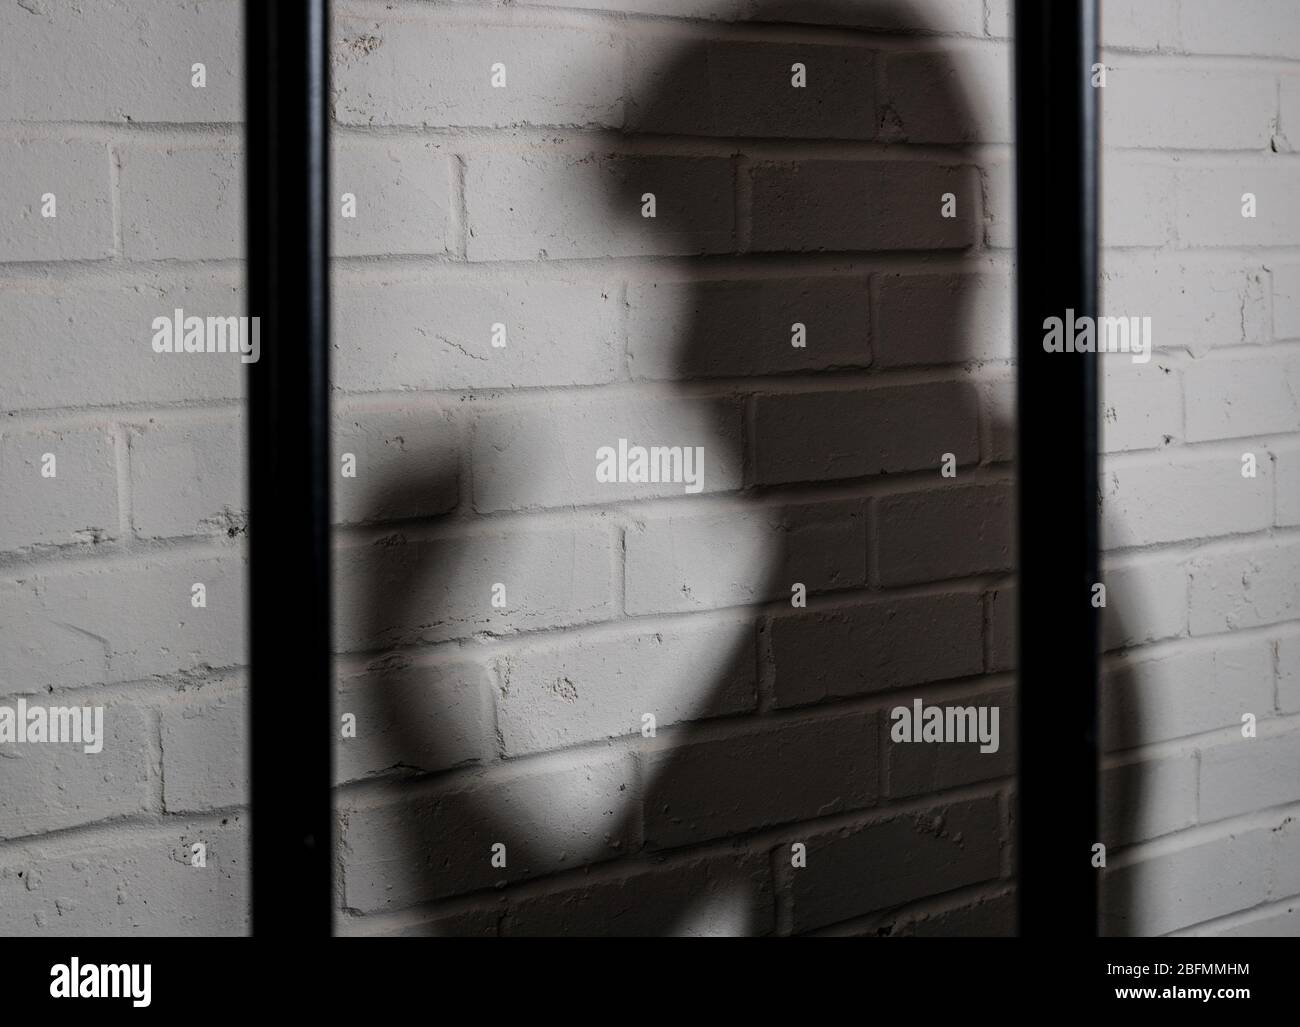 Shadow of a violent prisoner, prison abuse concept image Stock Photo